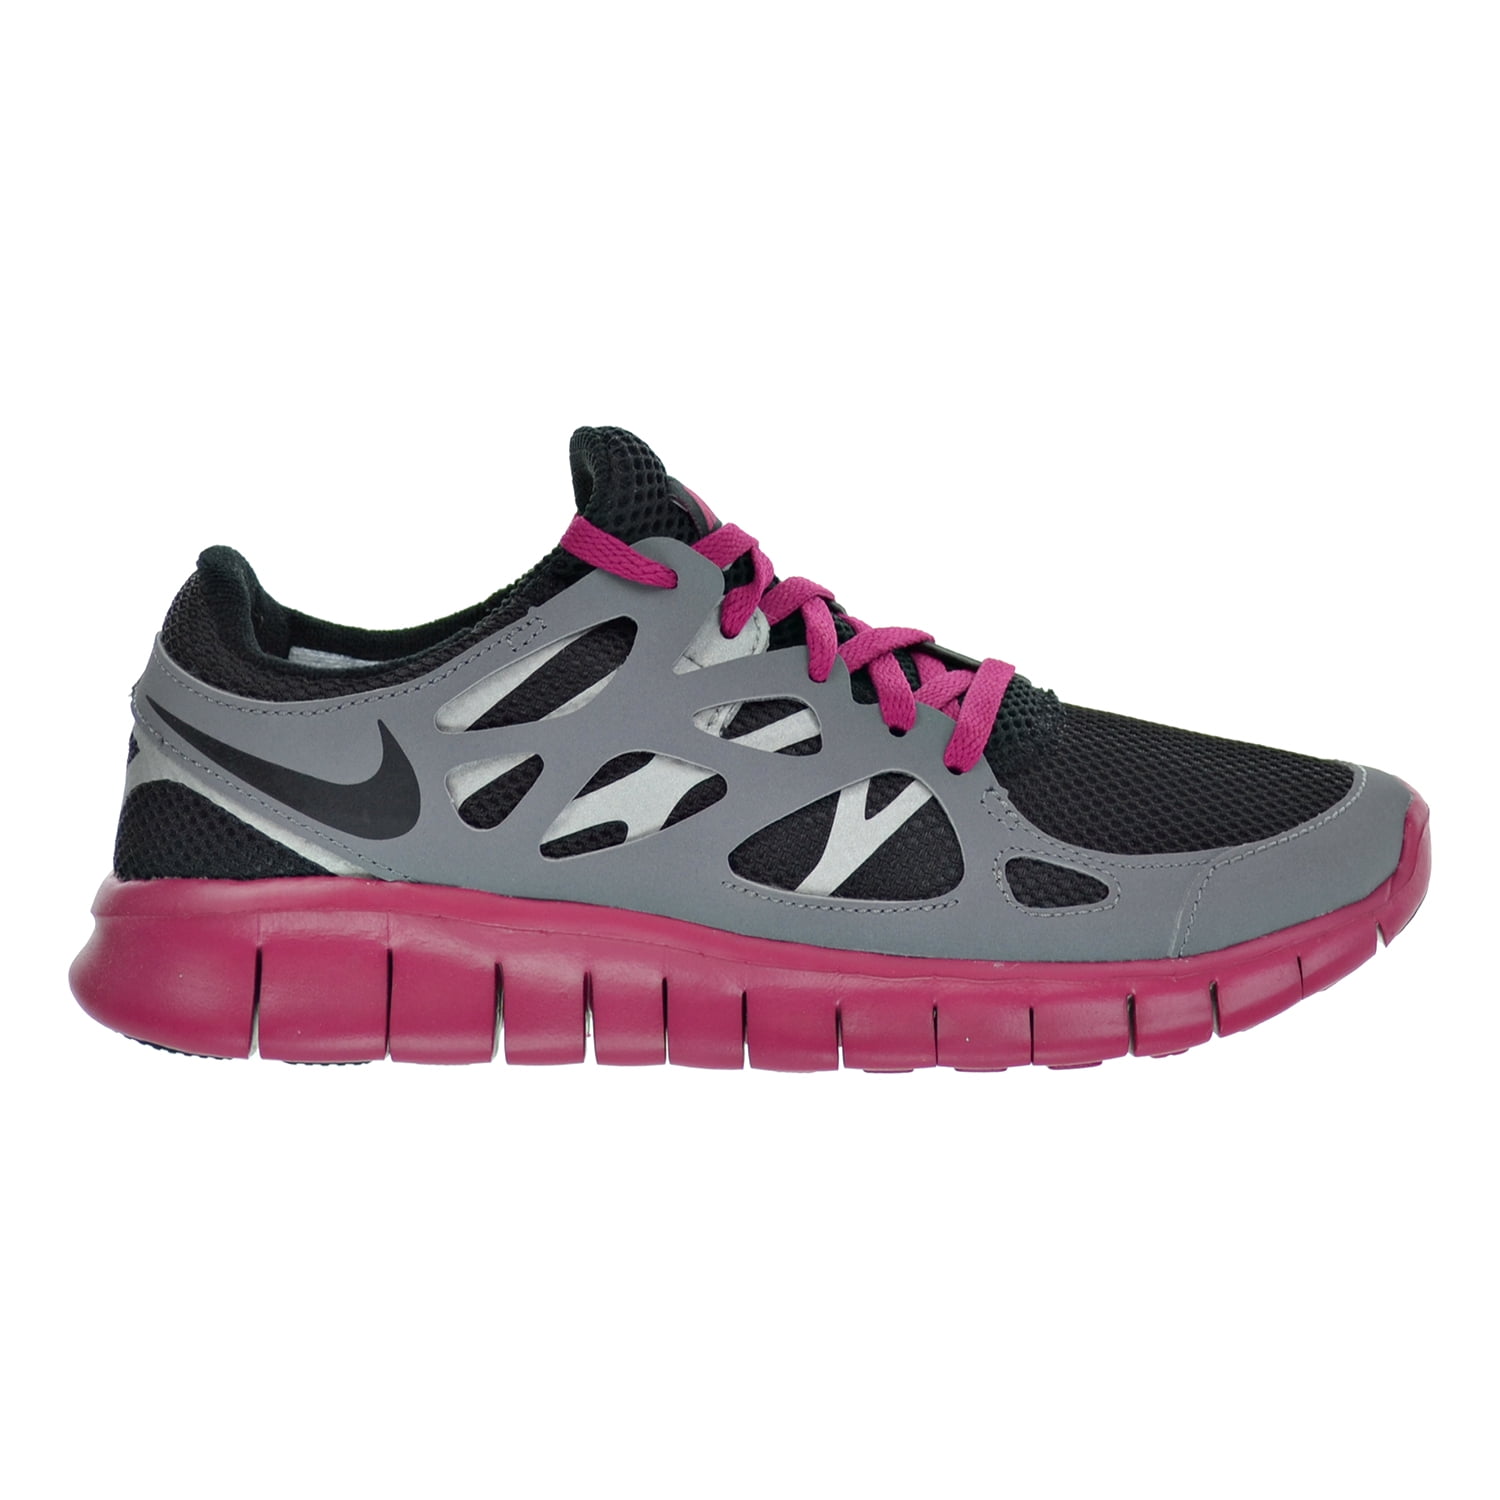 Nike Free Run+ 2 EXT Women's Shoes Black/Cool Grey/Sport 536746-001 - Walmart.com